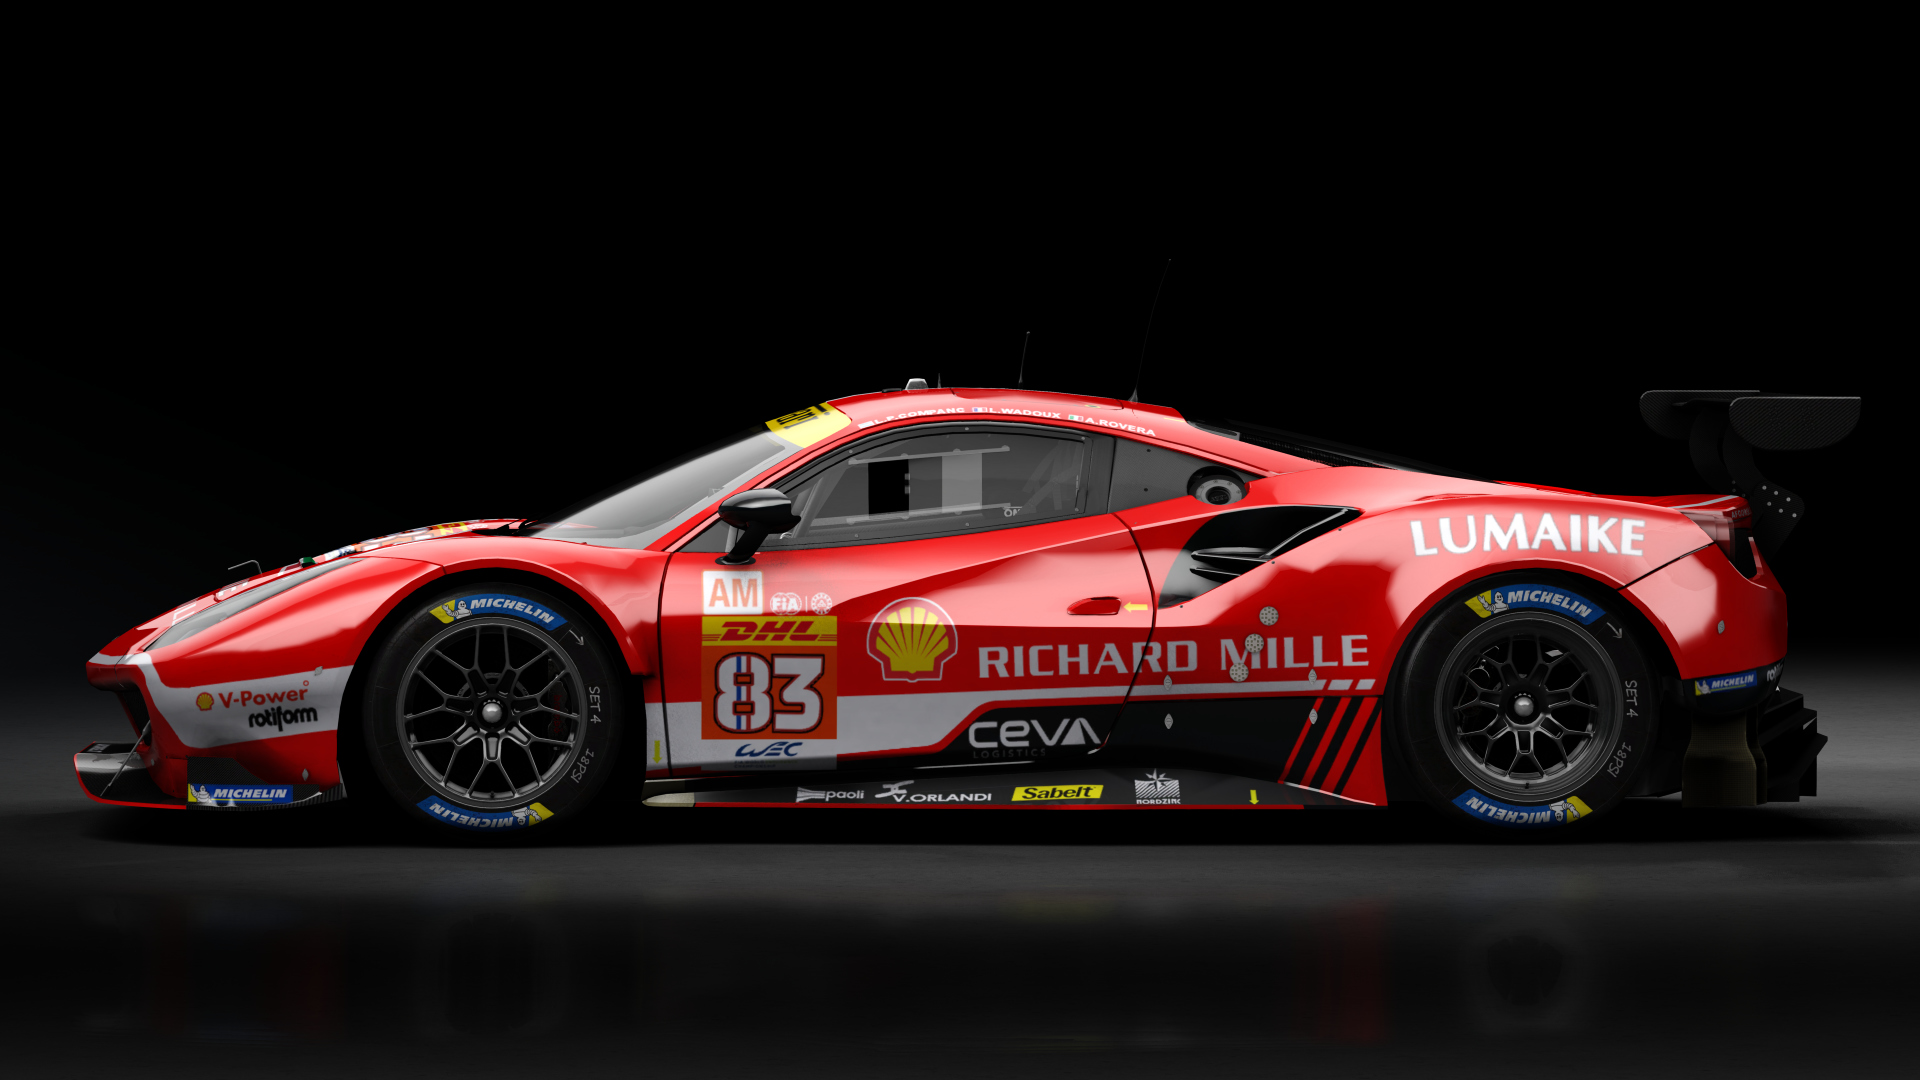 2018 Ferrari 488 GTE Evo [Michelotto], skin 2023 #83 Richard Mille WEC Rd2 SPA